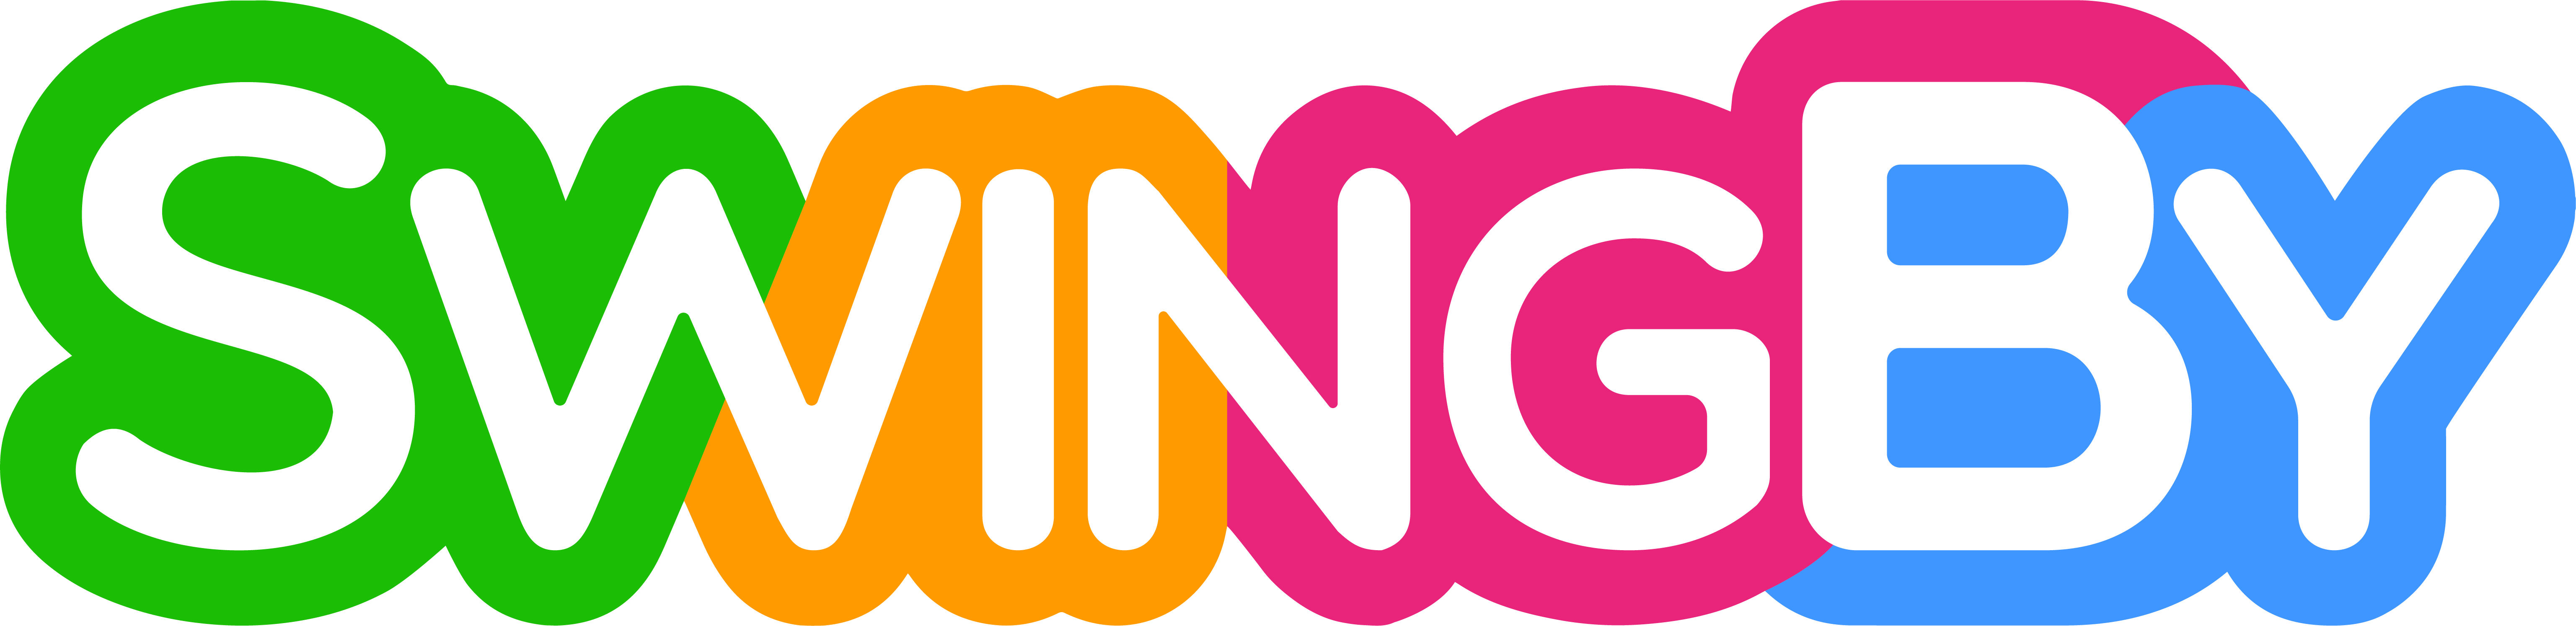 SwingBy logo